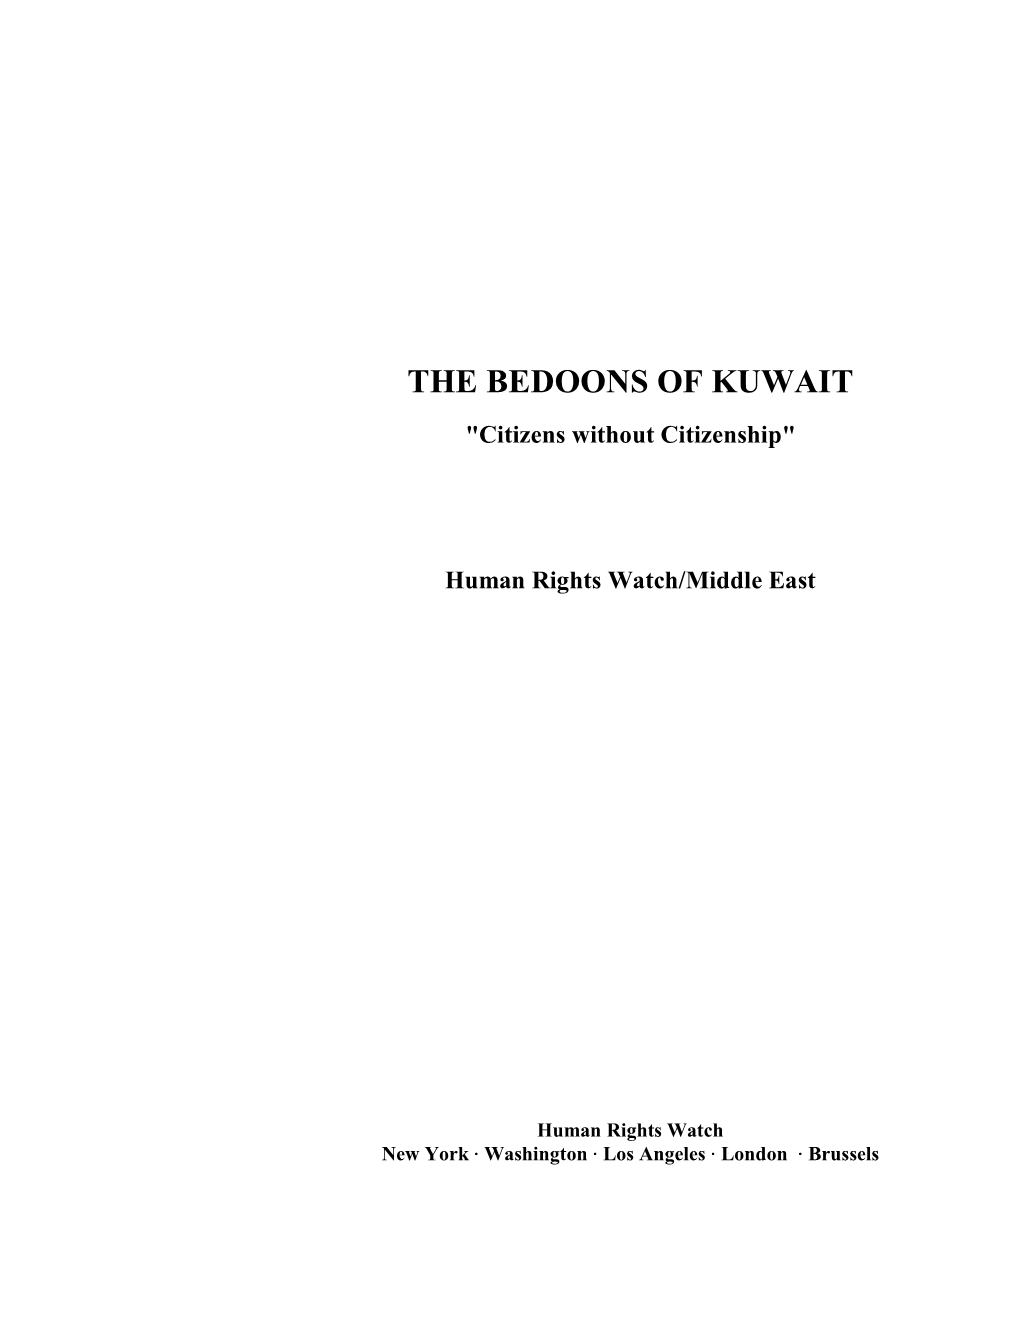 The Bedoons of Kuwait